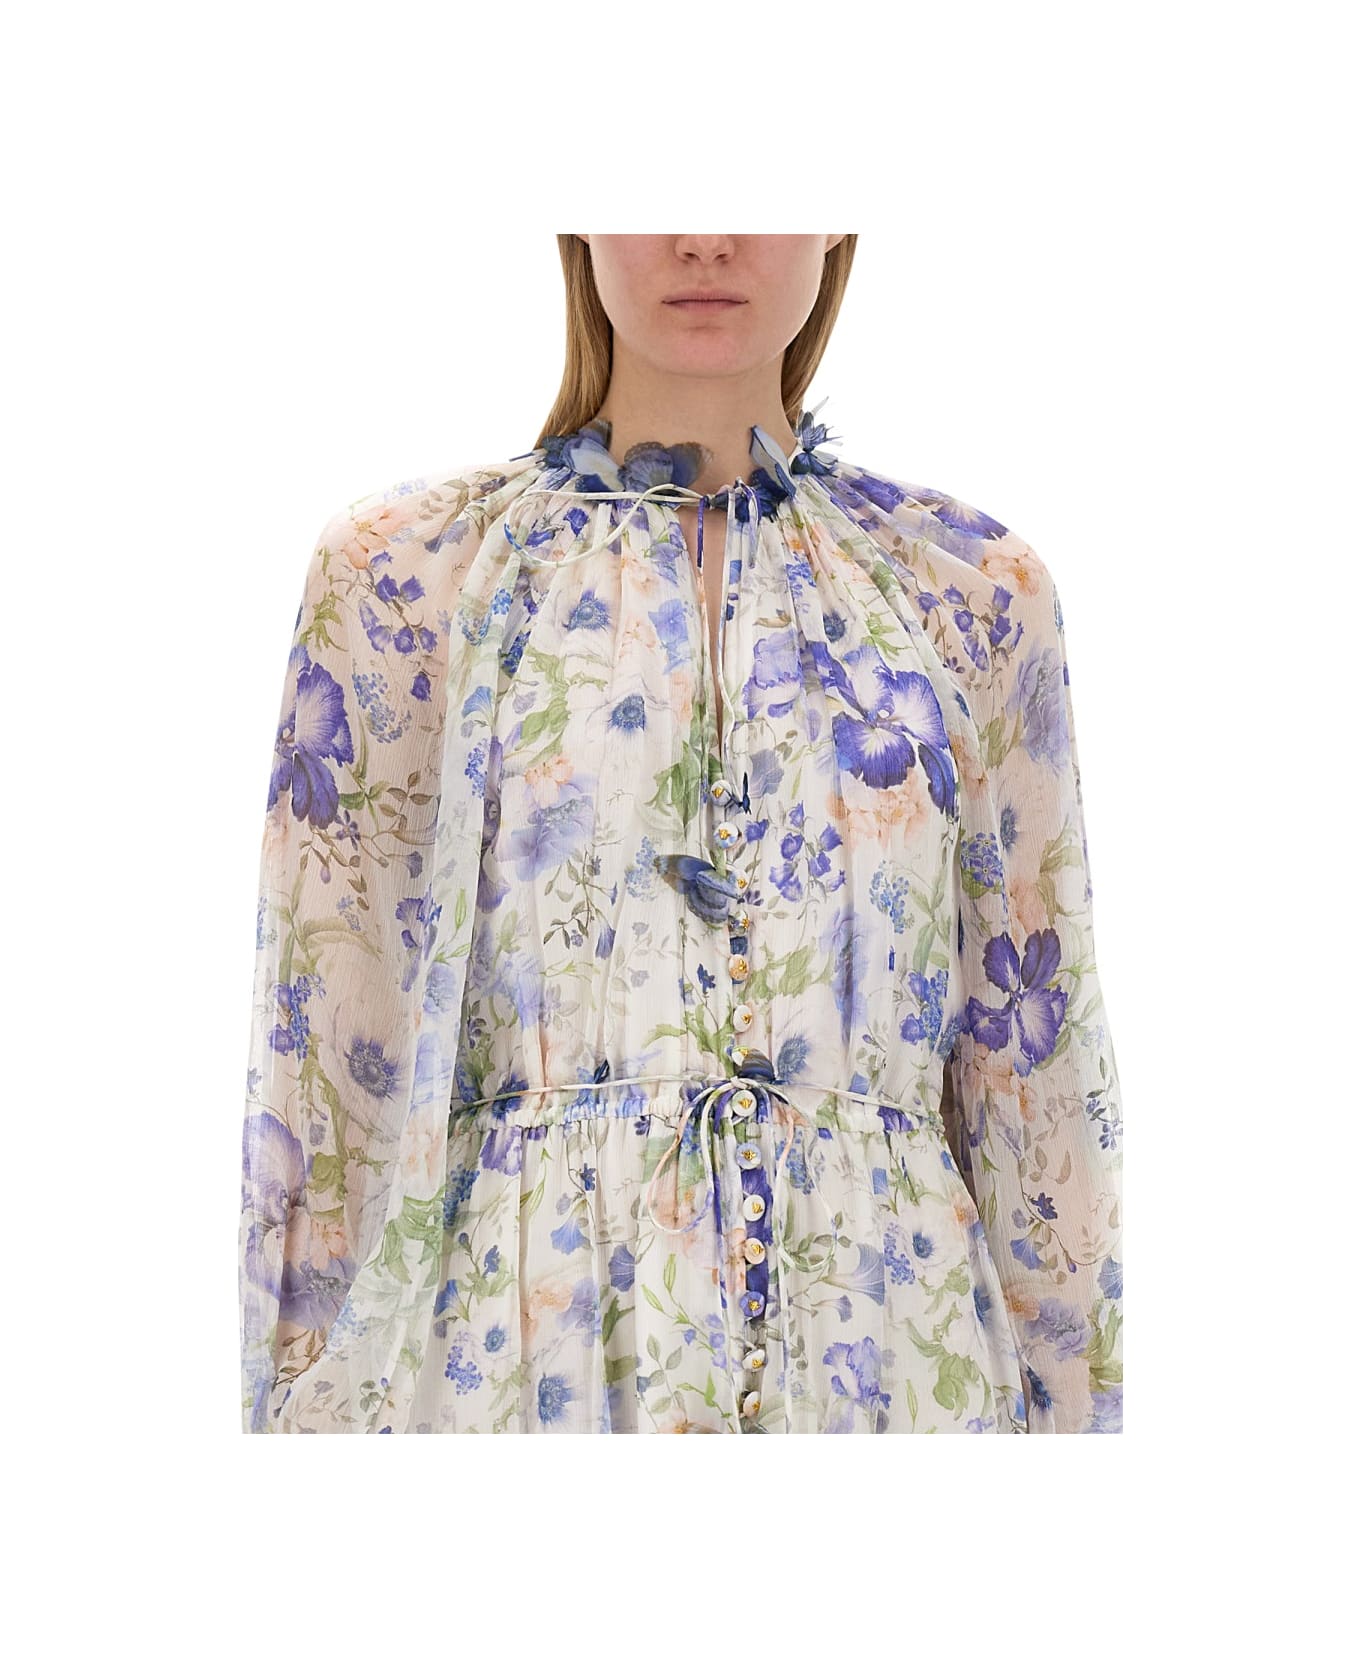 Zimmermann Dress With Floral Pattern - Blugriv Blue Garden Ivory ジャンプスーツ